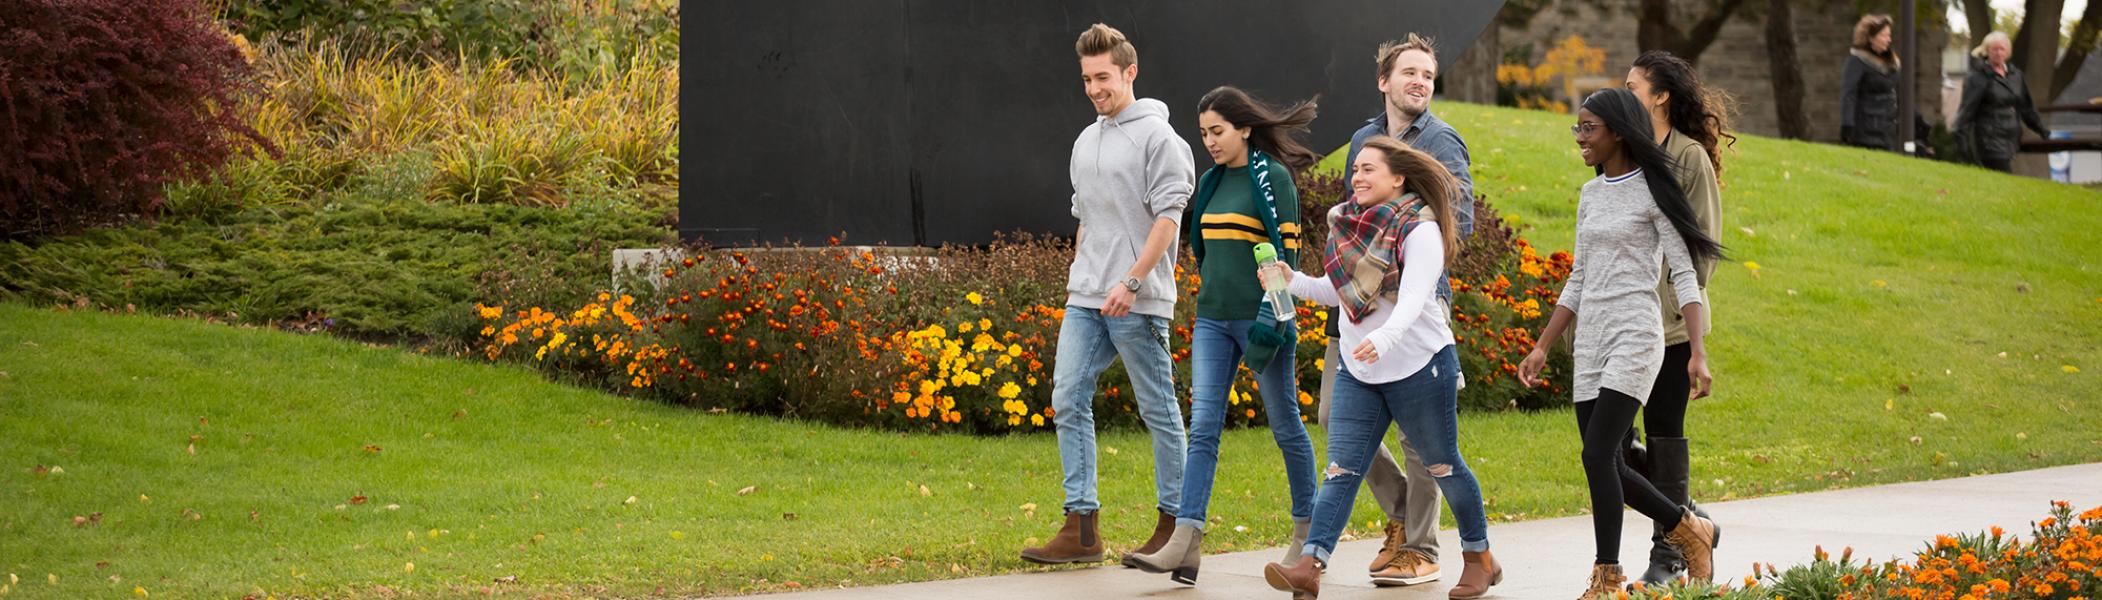 Trent University Durham students walking together.